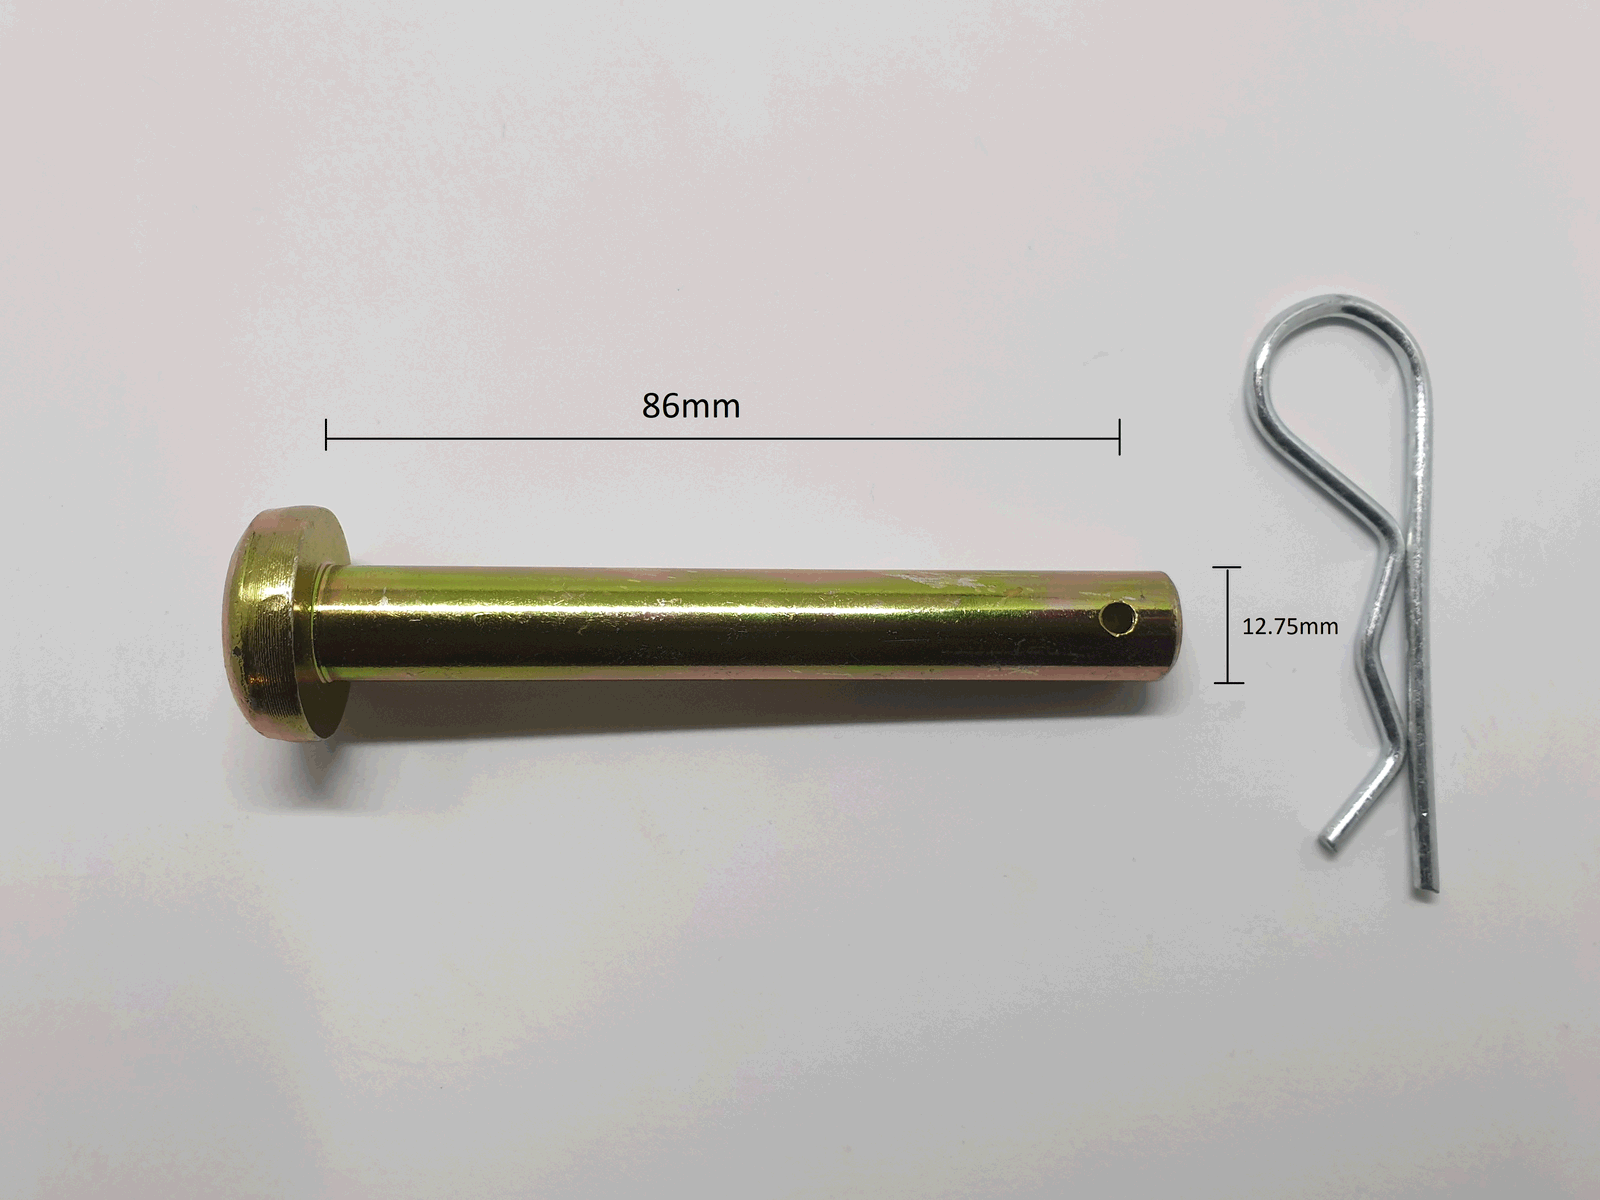 Sureweld Ramp Pin Set